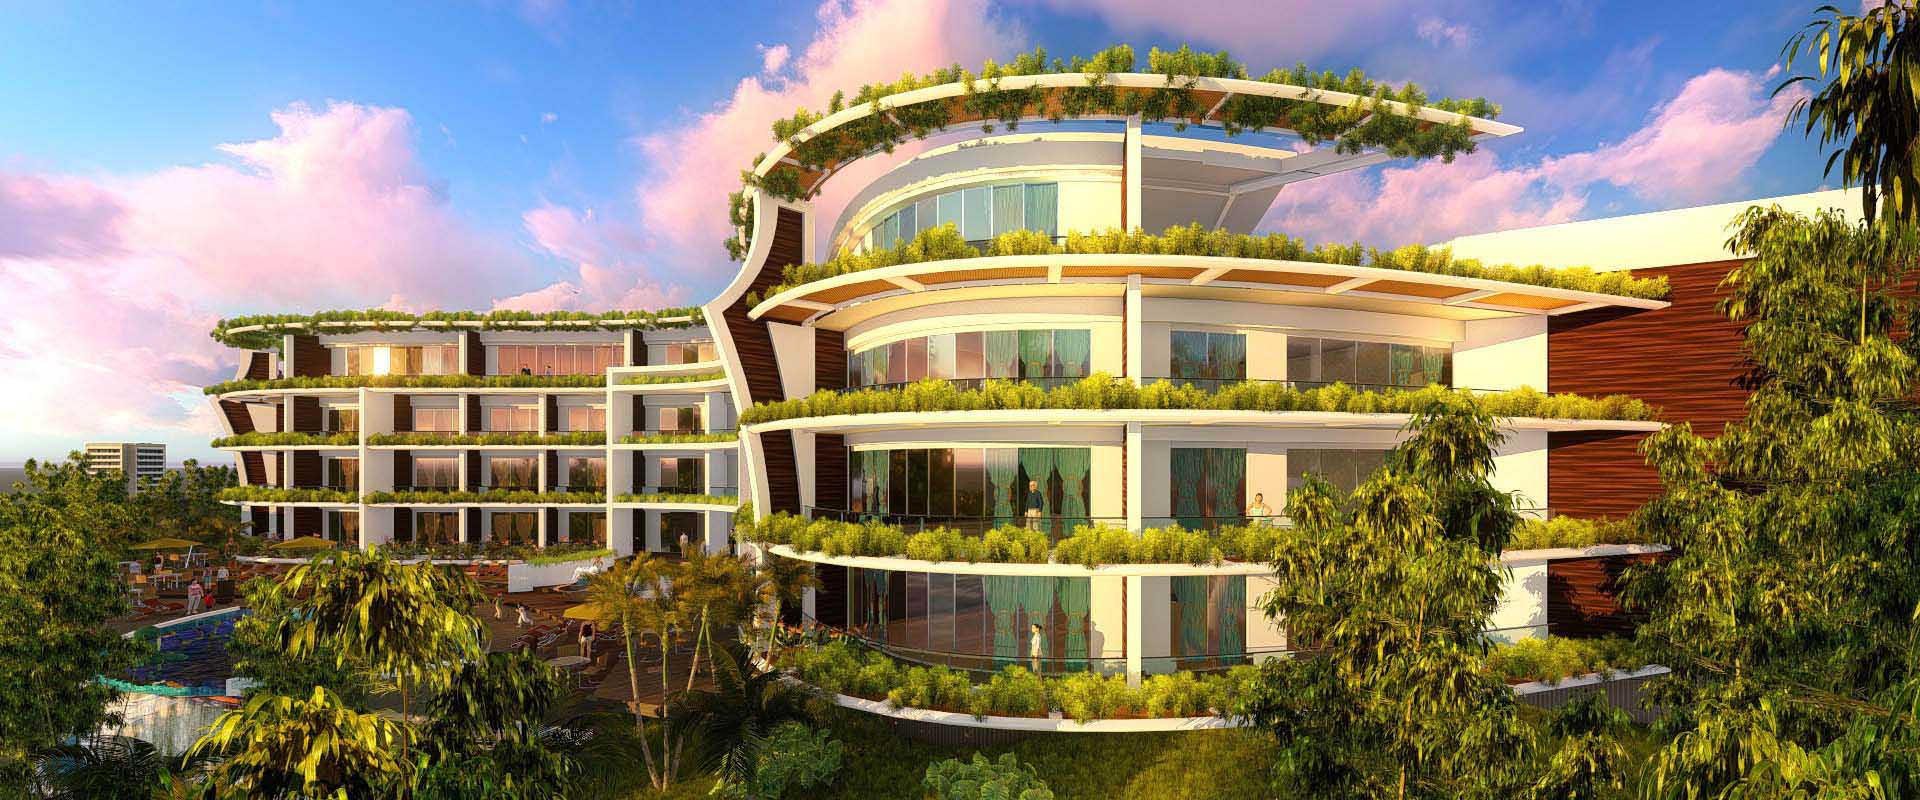 Tropical_Bali_Hotel_Modern_Design_SpaceLineDesign_Architects.jpg